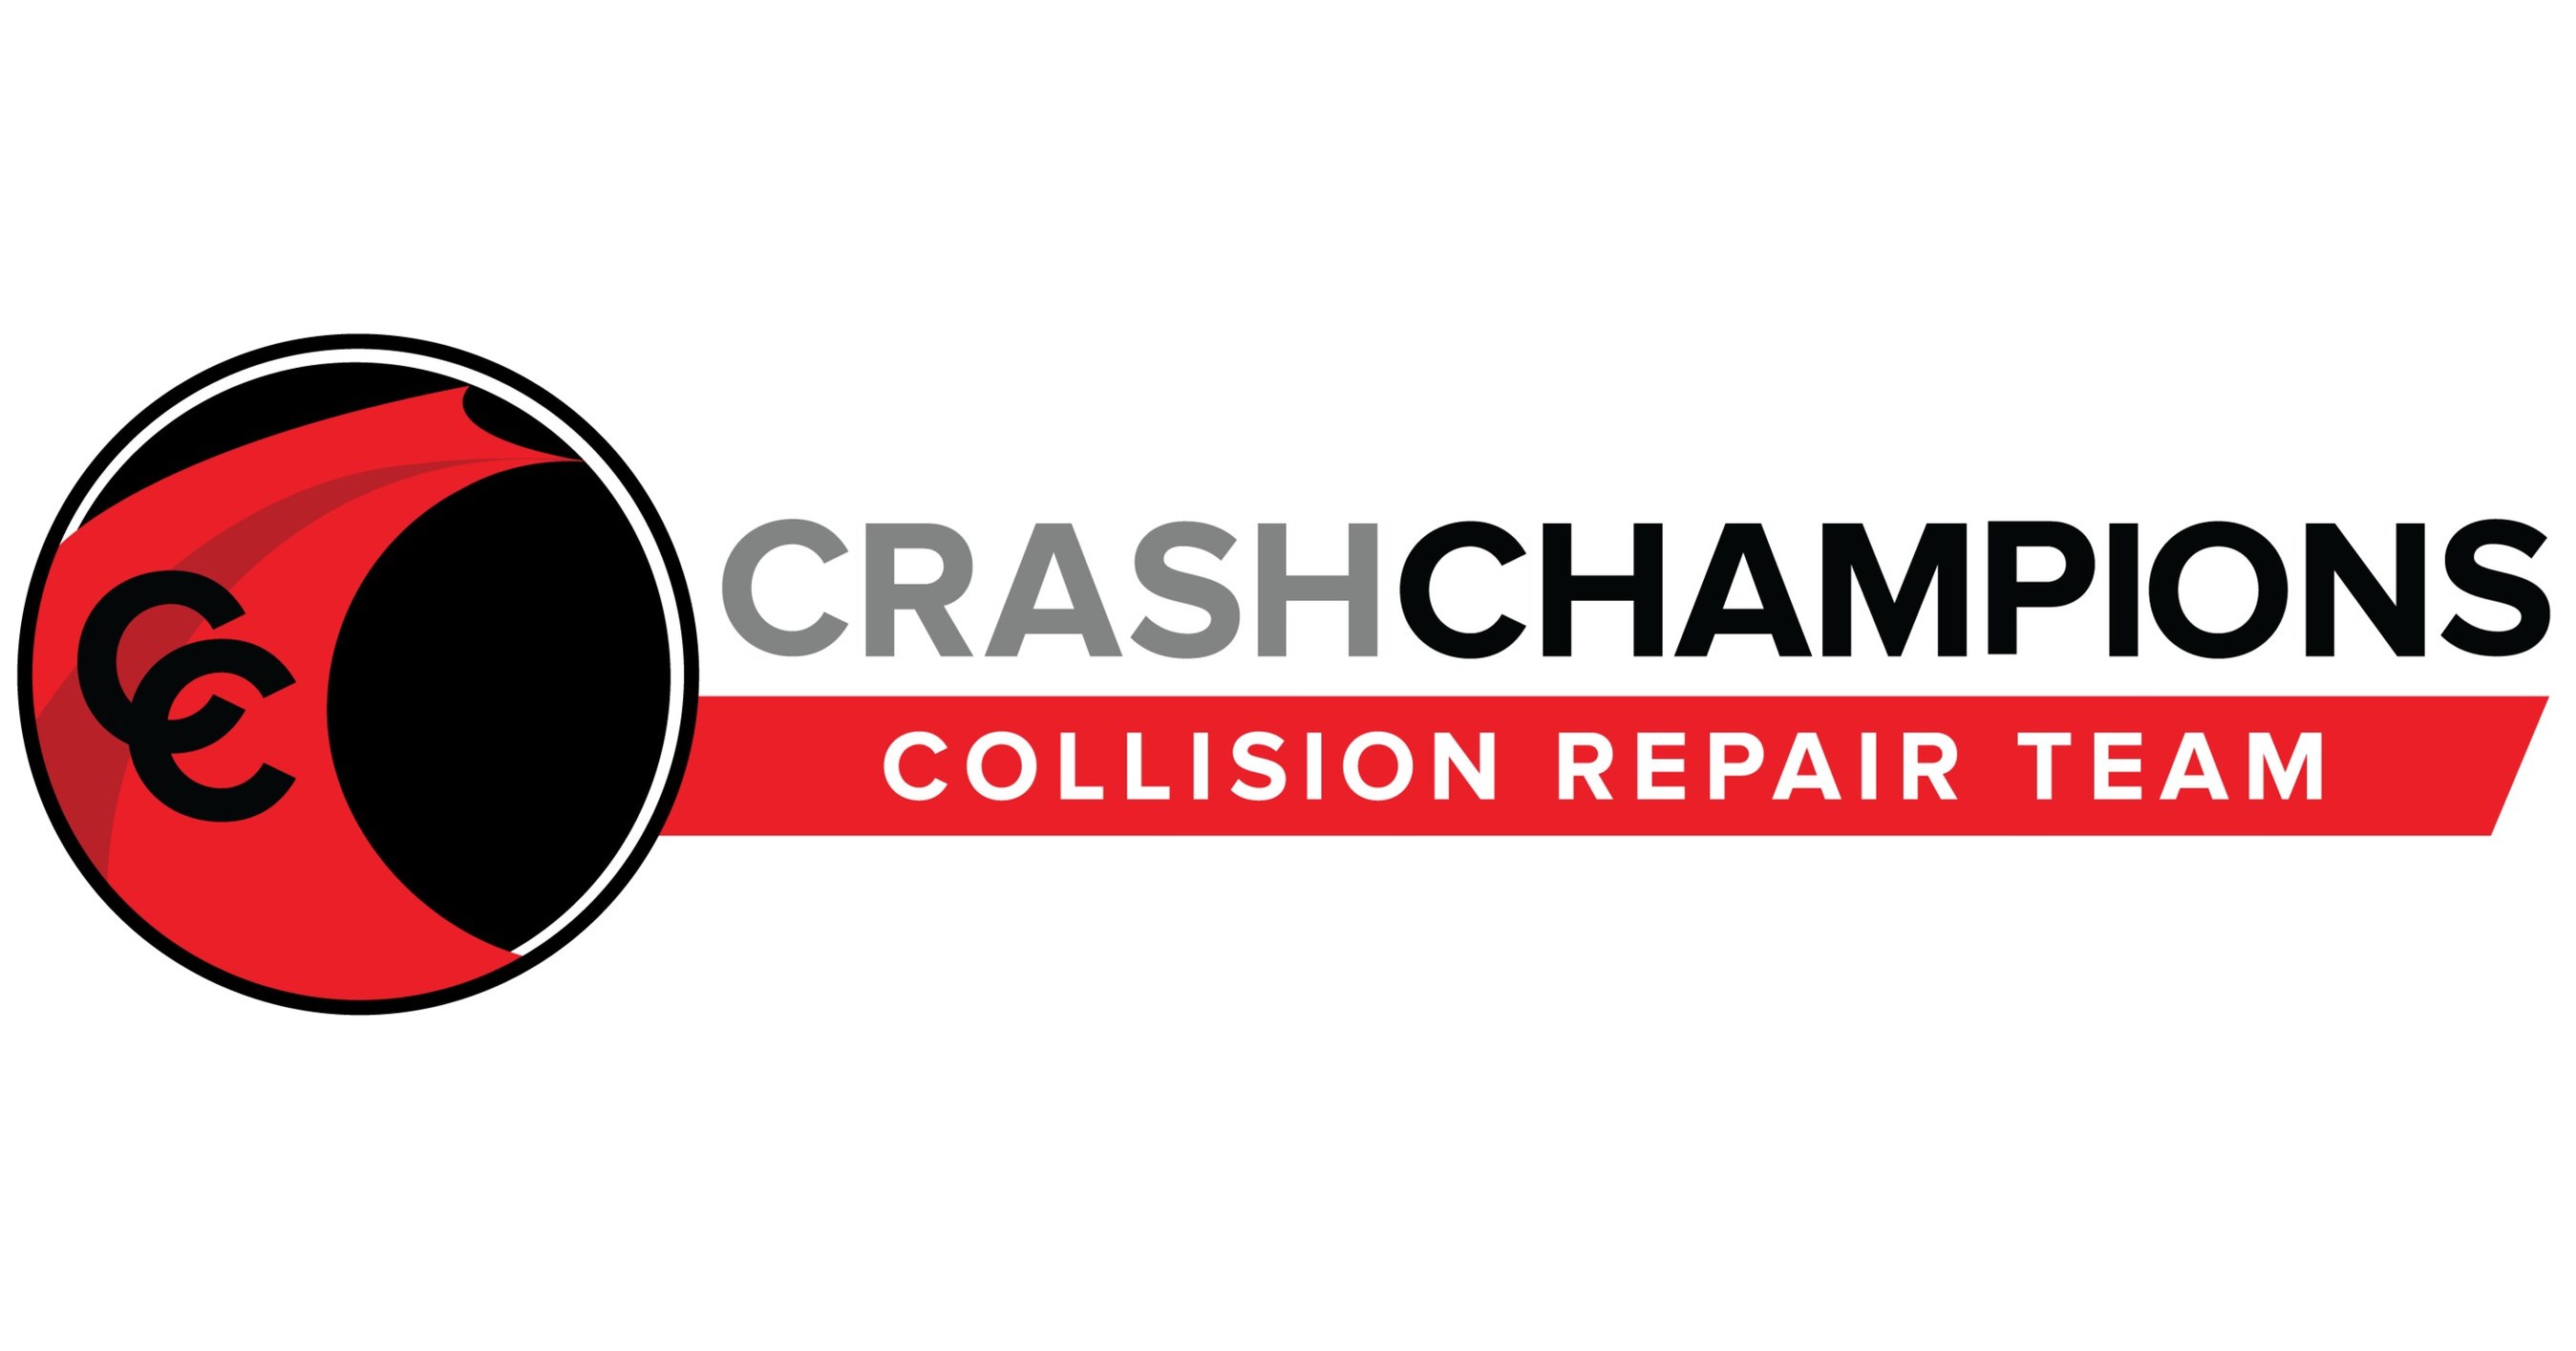 HUGE ANNOUNCEMENT!!! - Crash Champions Collision Repair